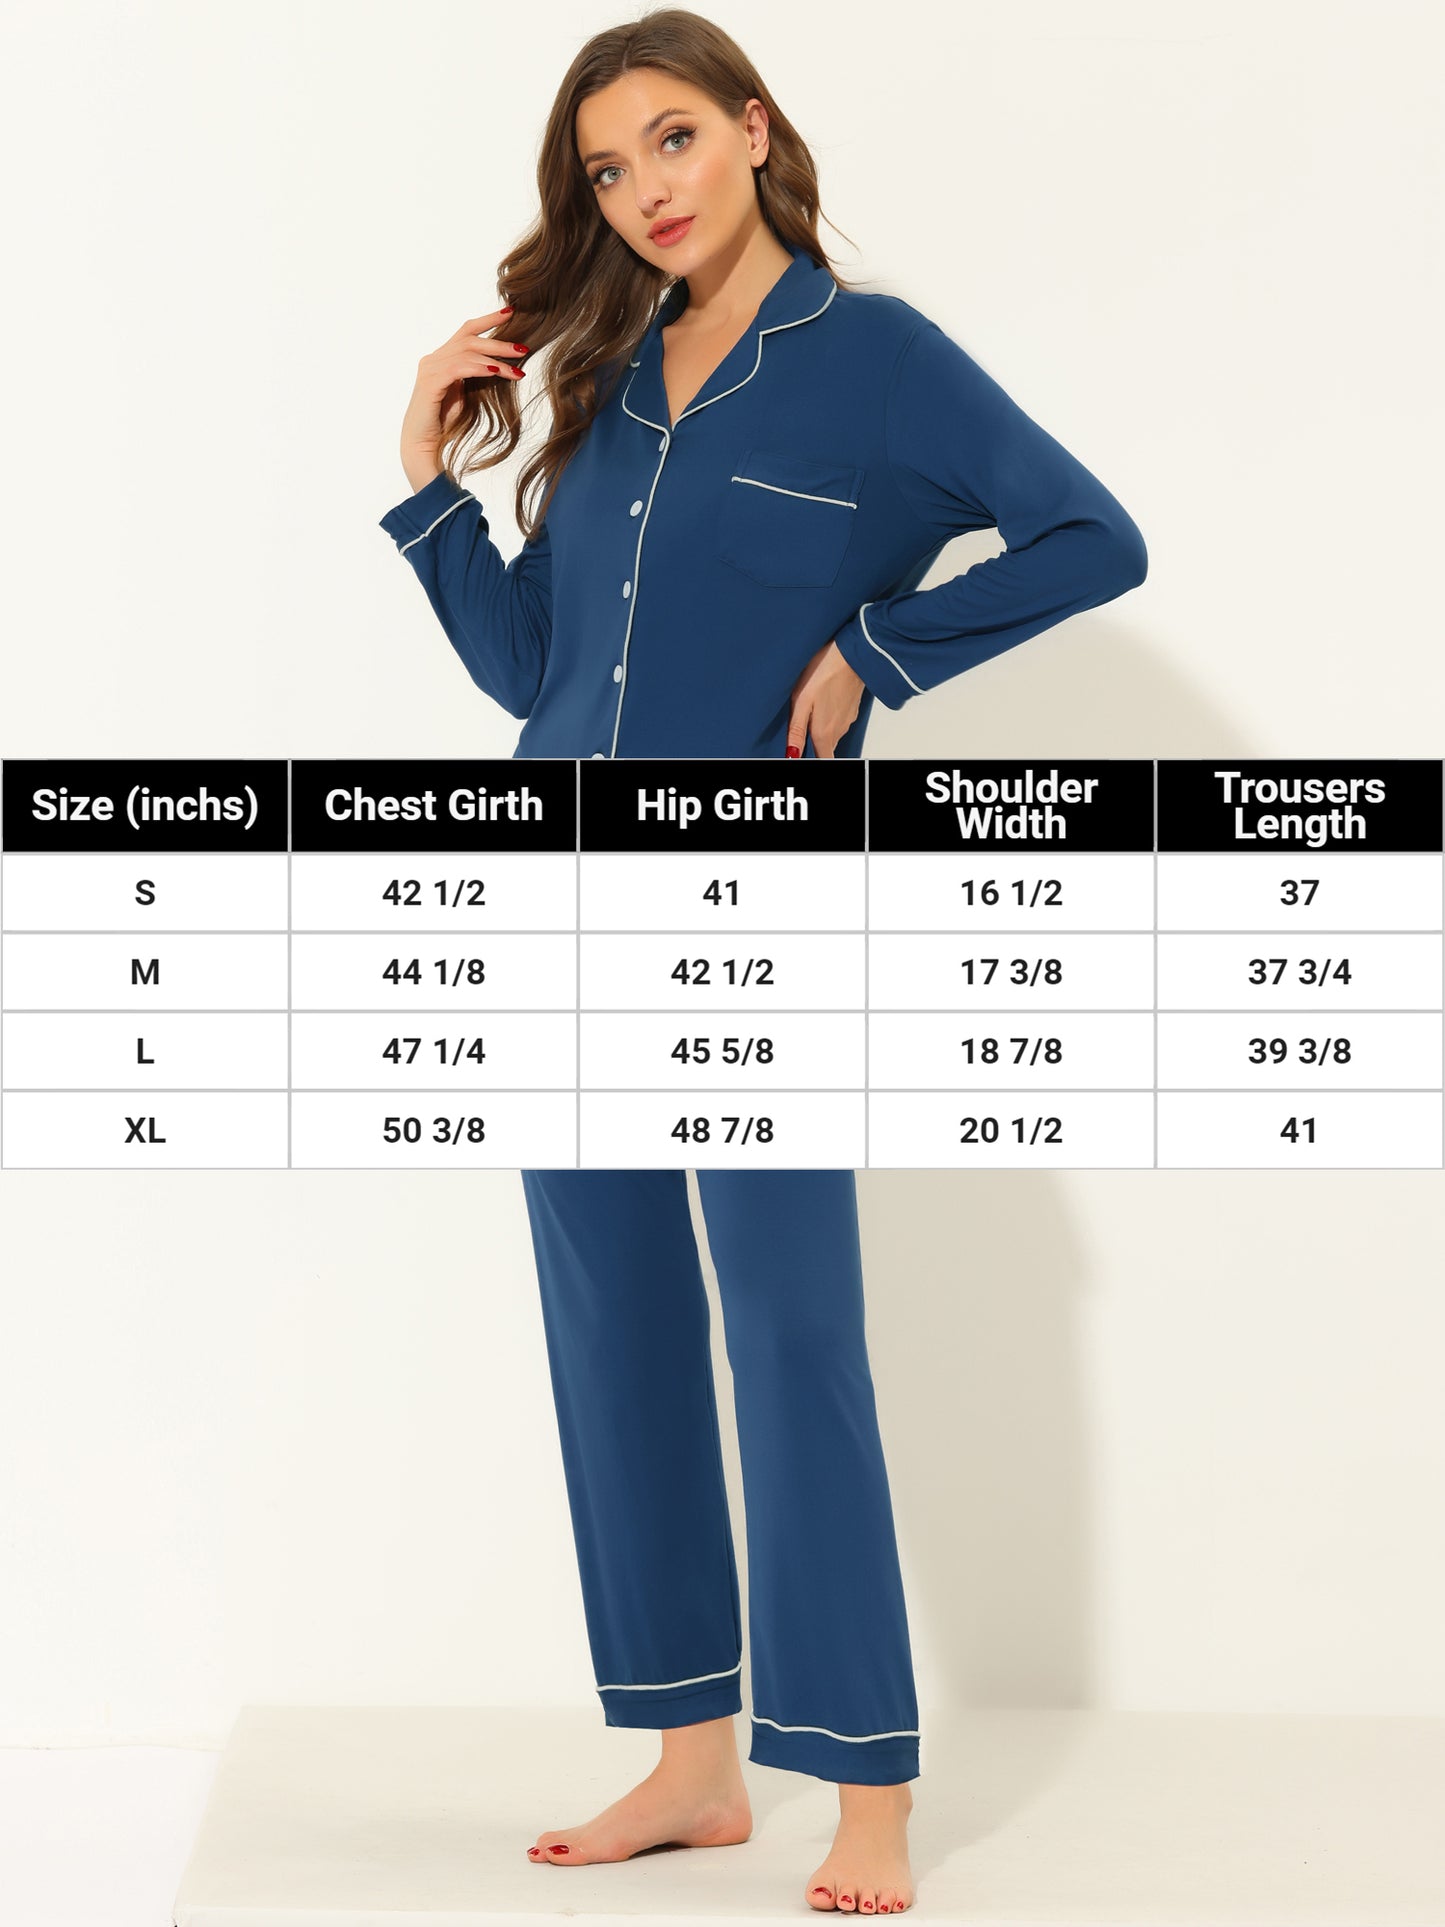 cheibear Pajama Sleep Shirt Nightwear Sleepwear Lounge Modal Pj Sets Blue